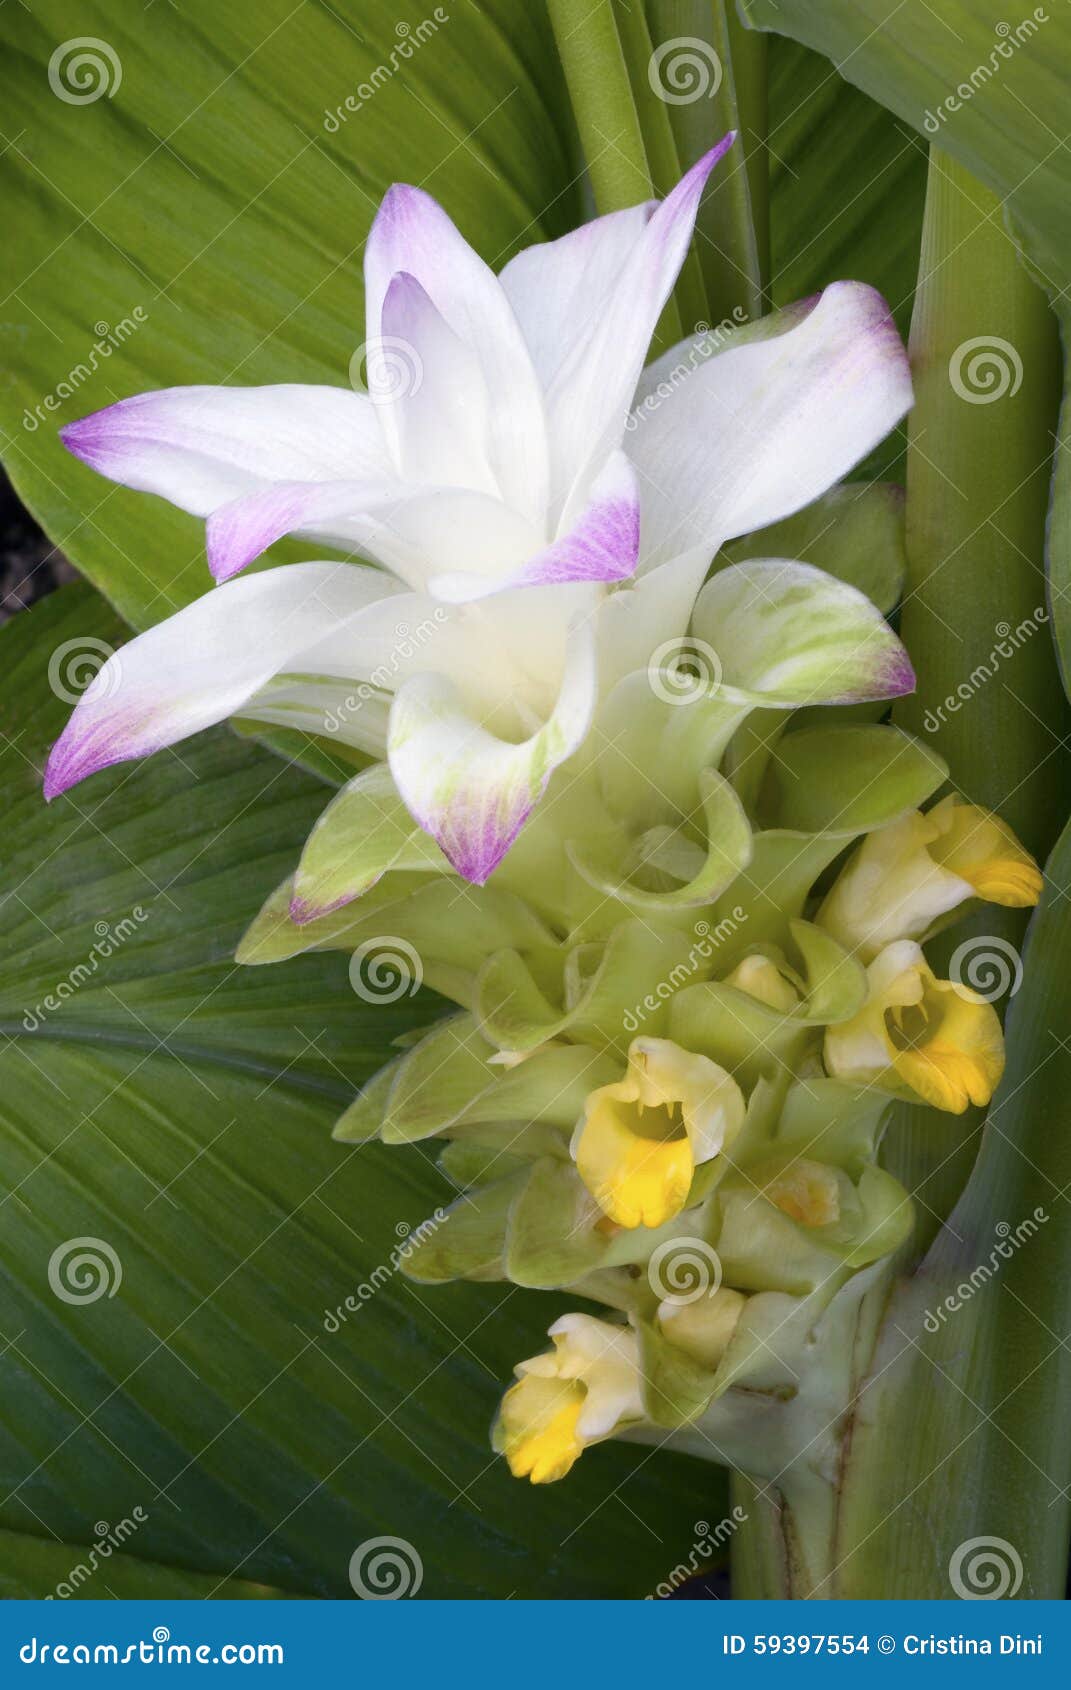 369 Curcuma Flower Longa Stock Photos - Free & Royalty-Free Stock Photos  from Dreamstime